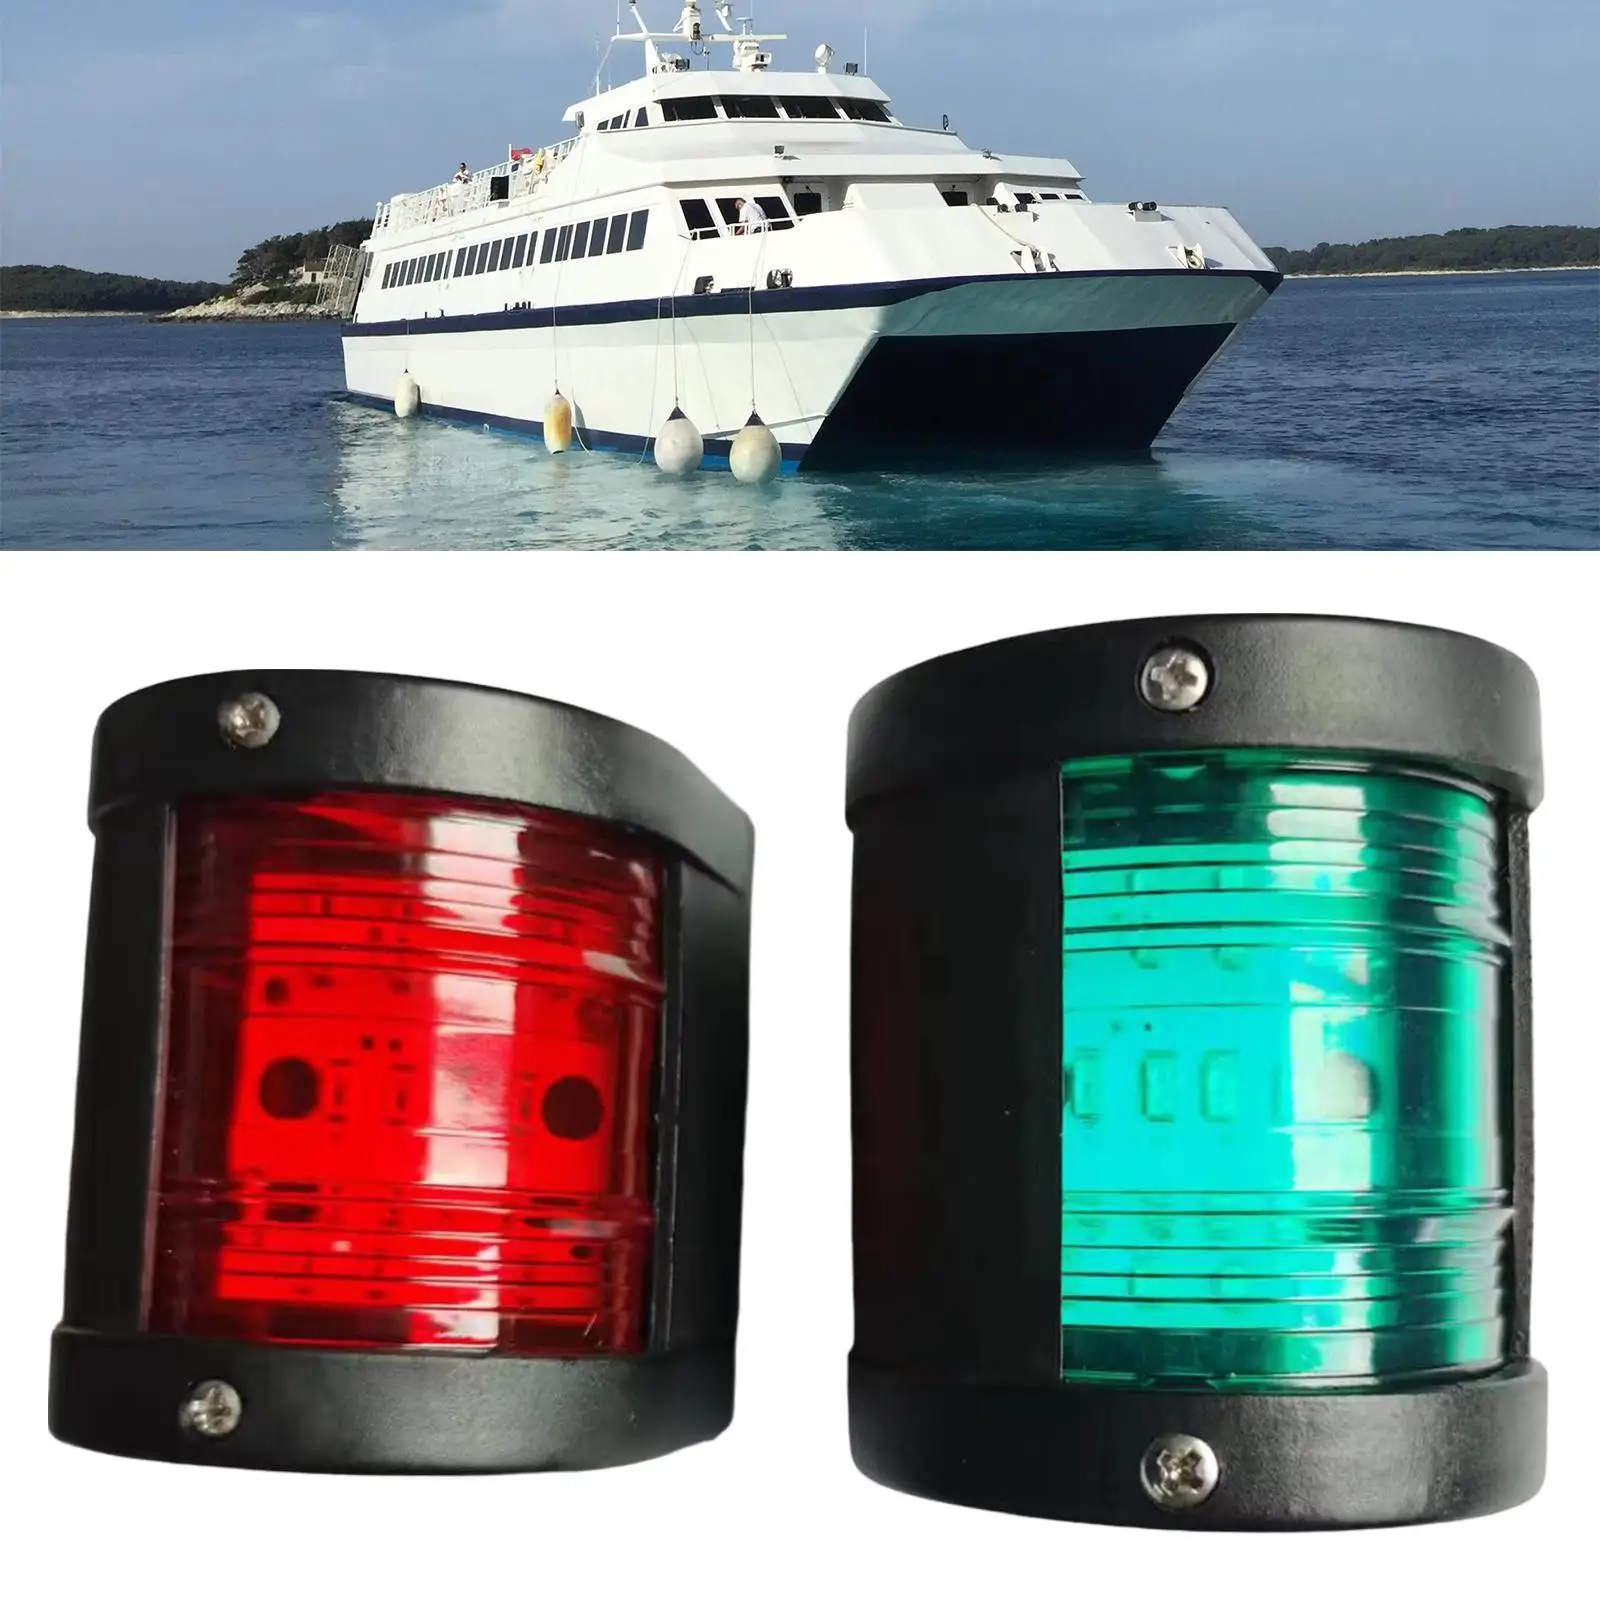 2Pcs Signal Navigation Light Navigation Light for Marine Boat Yacht